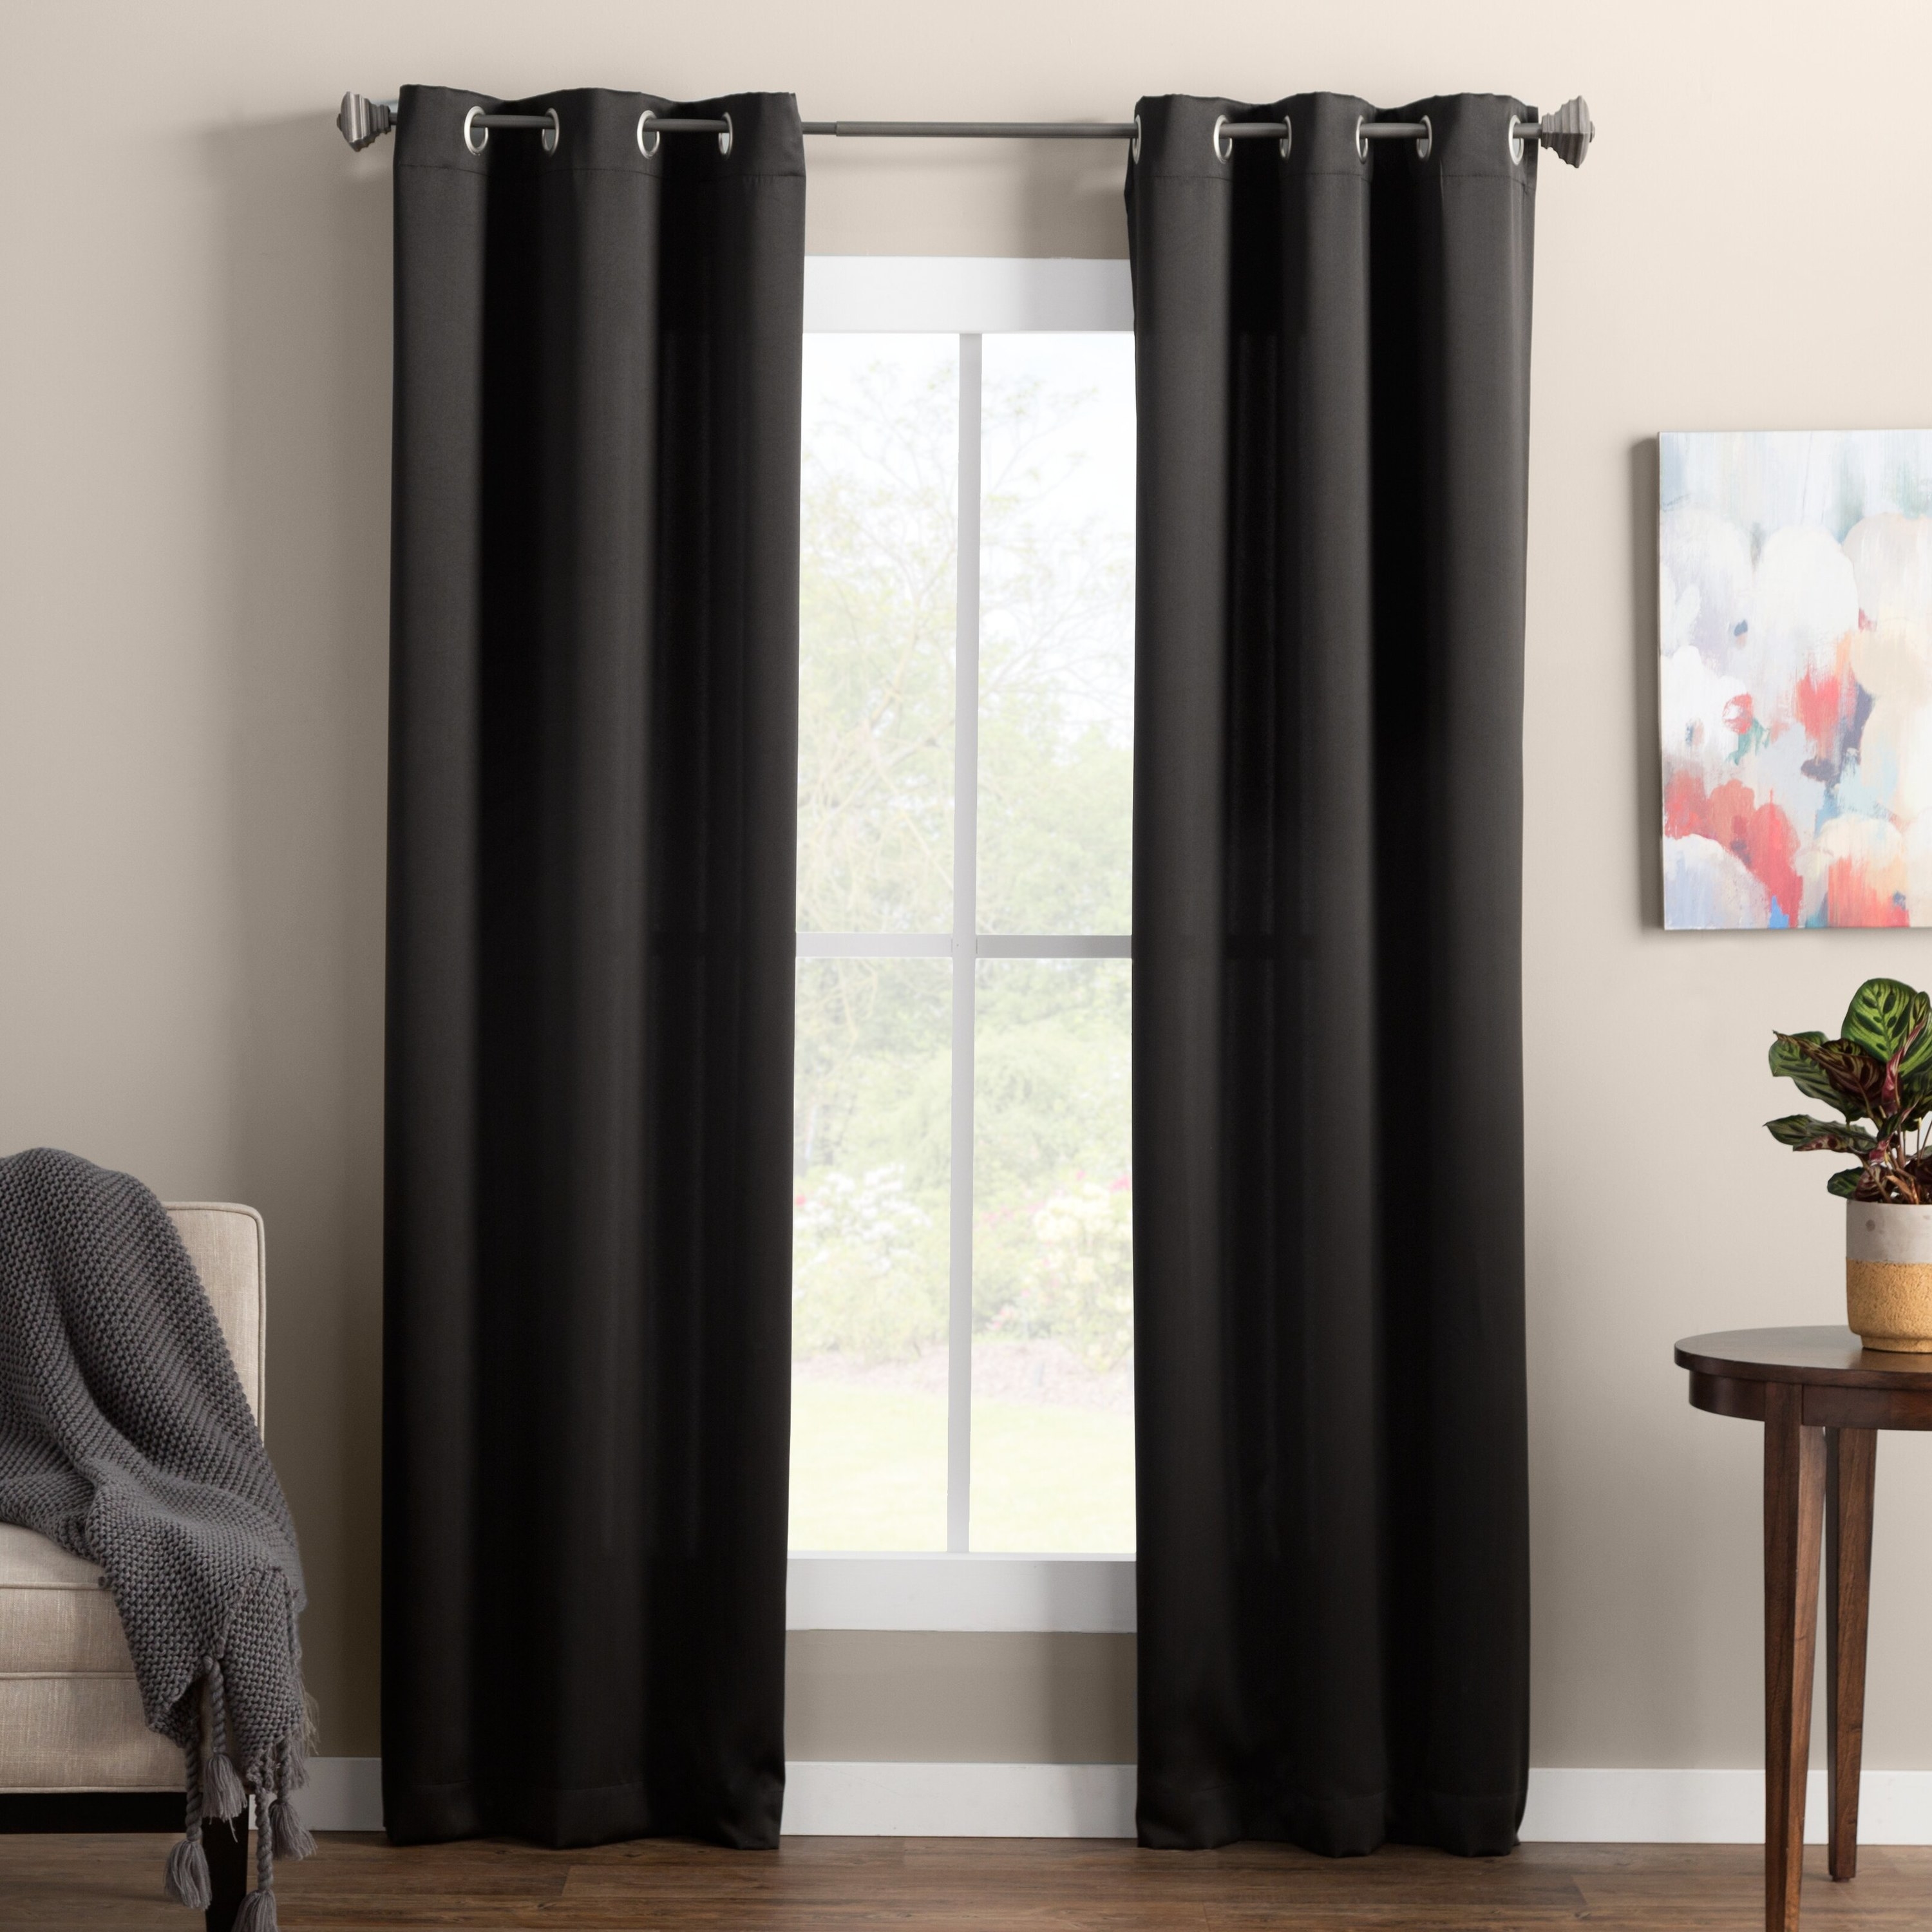 the black curtain panels